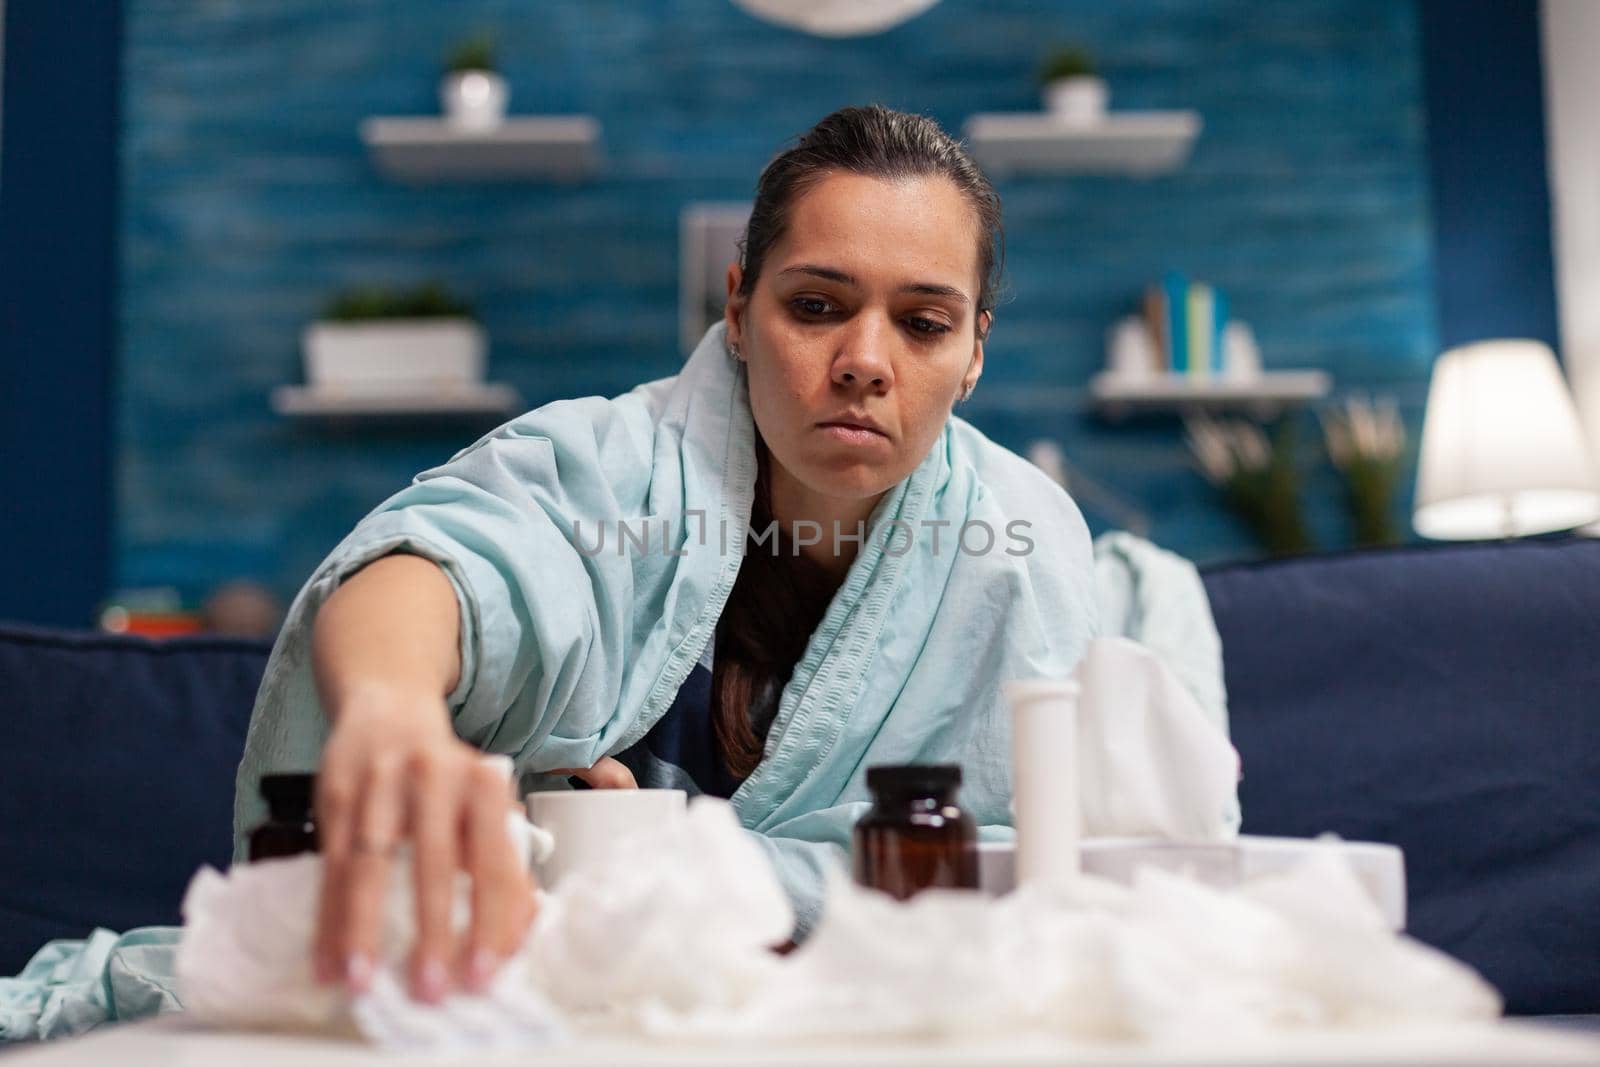 Sick woman taking medicine for seasonal virus by DCStudio